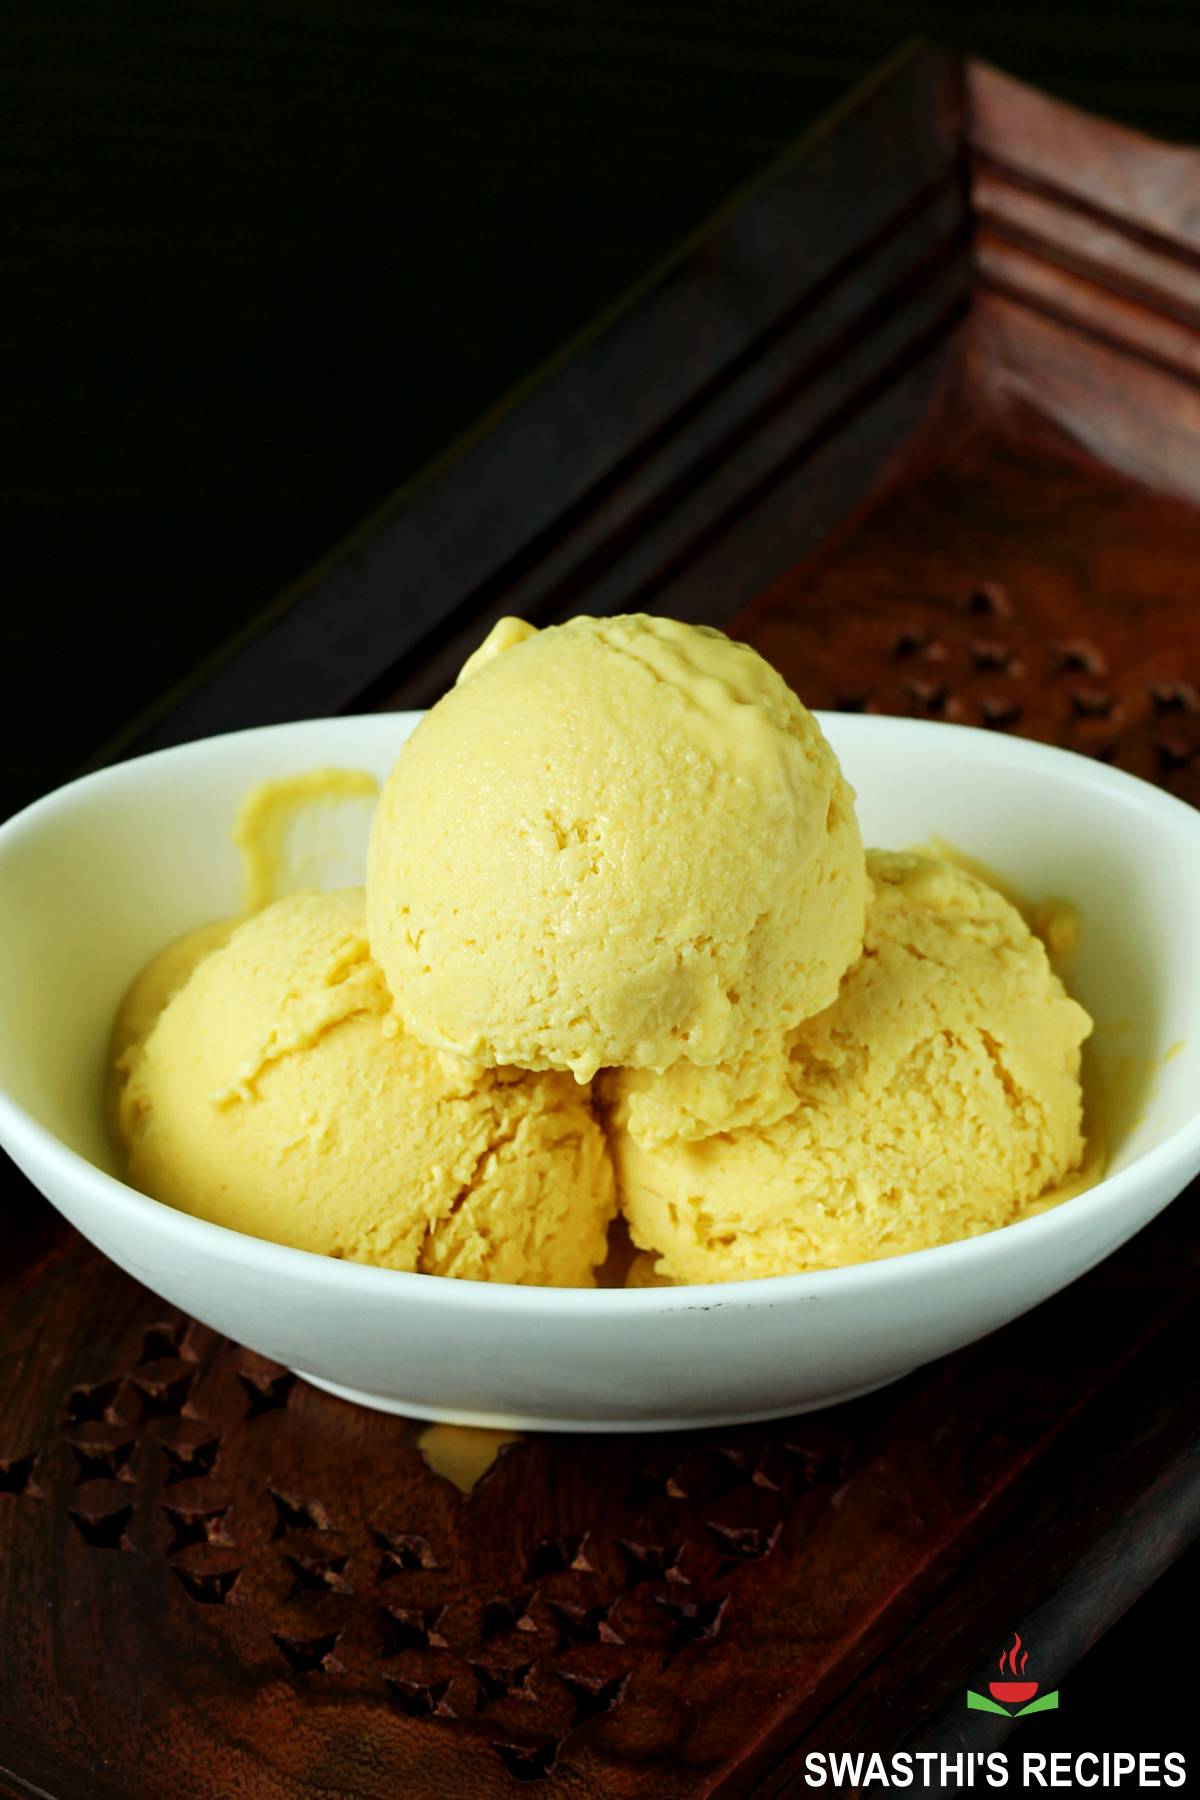 mango ice cream